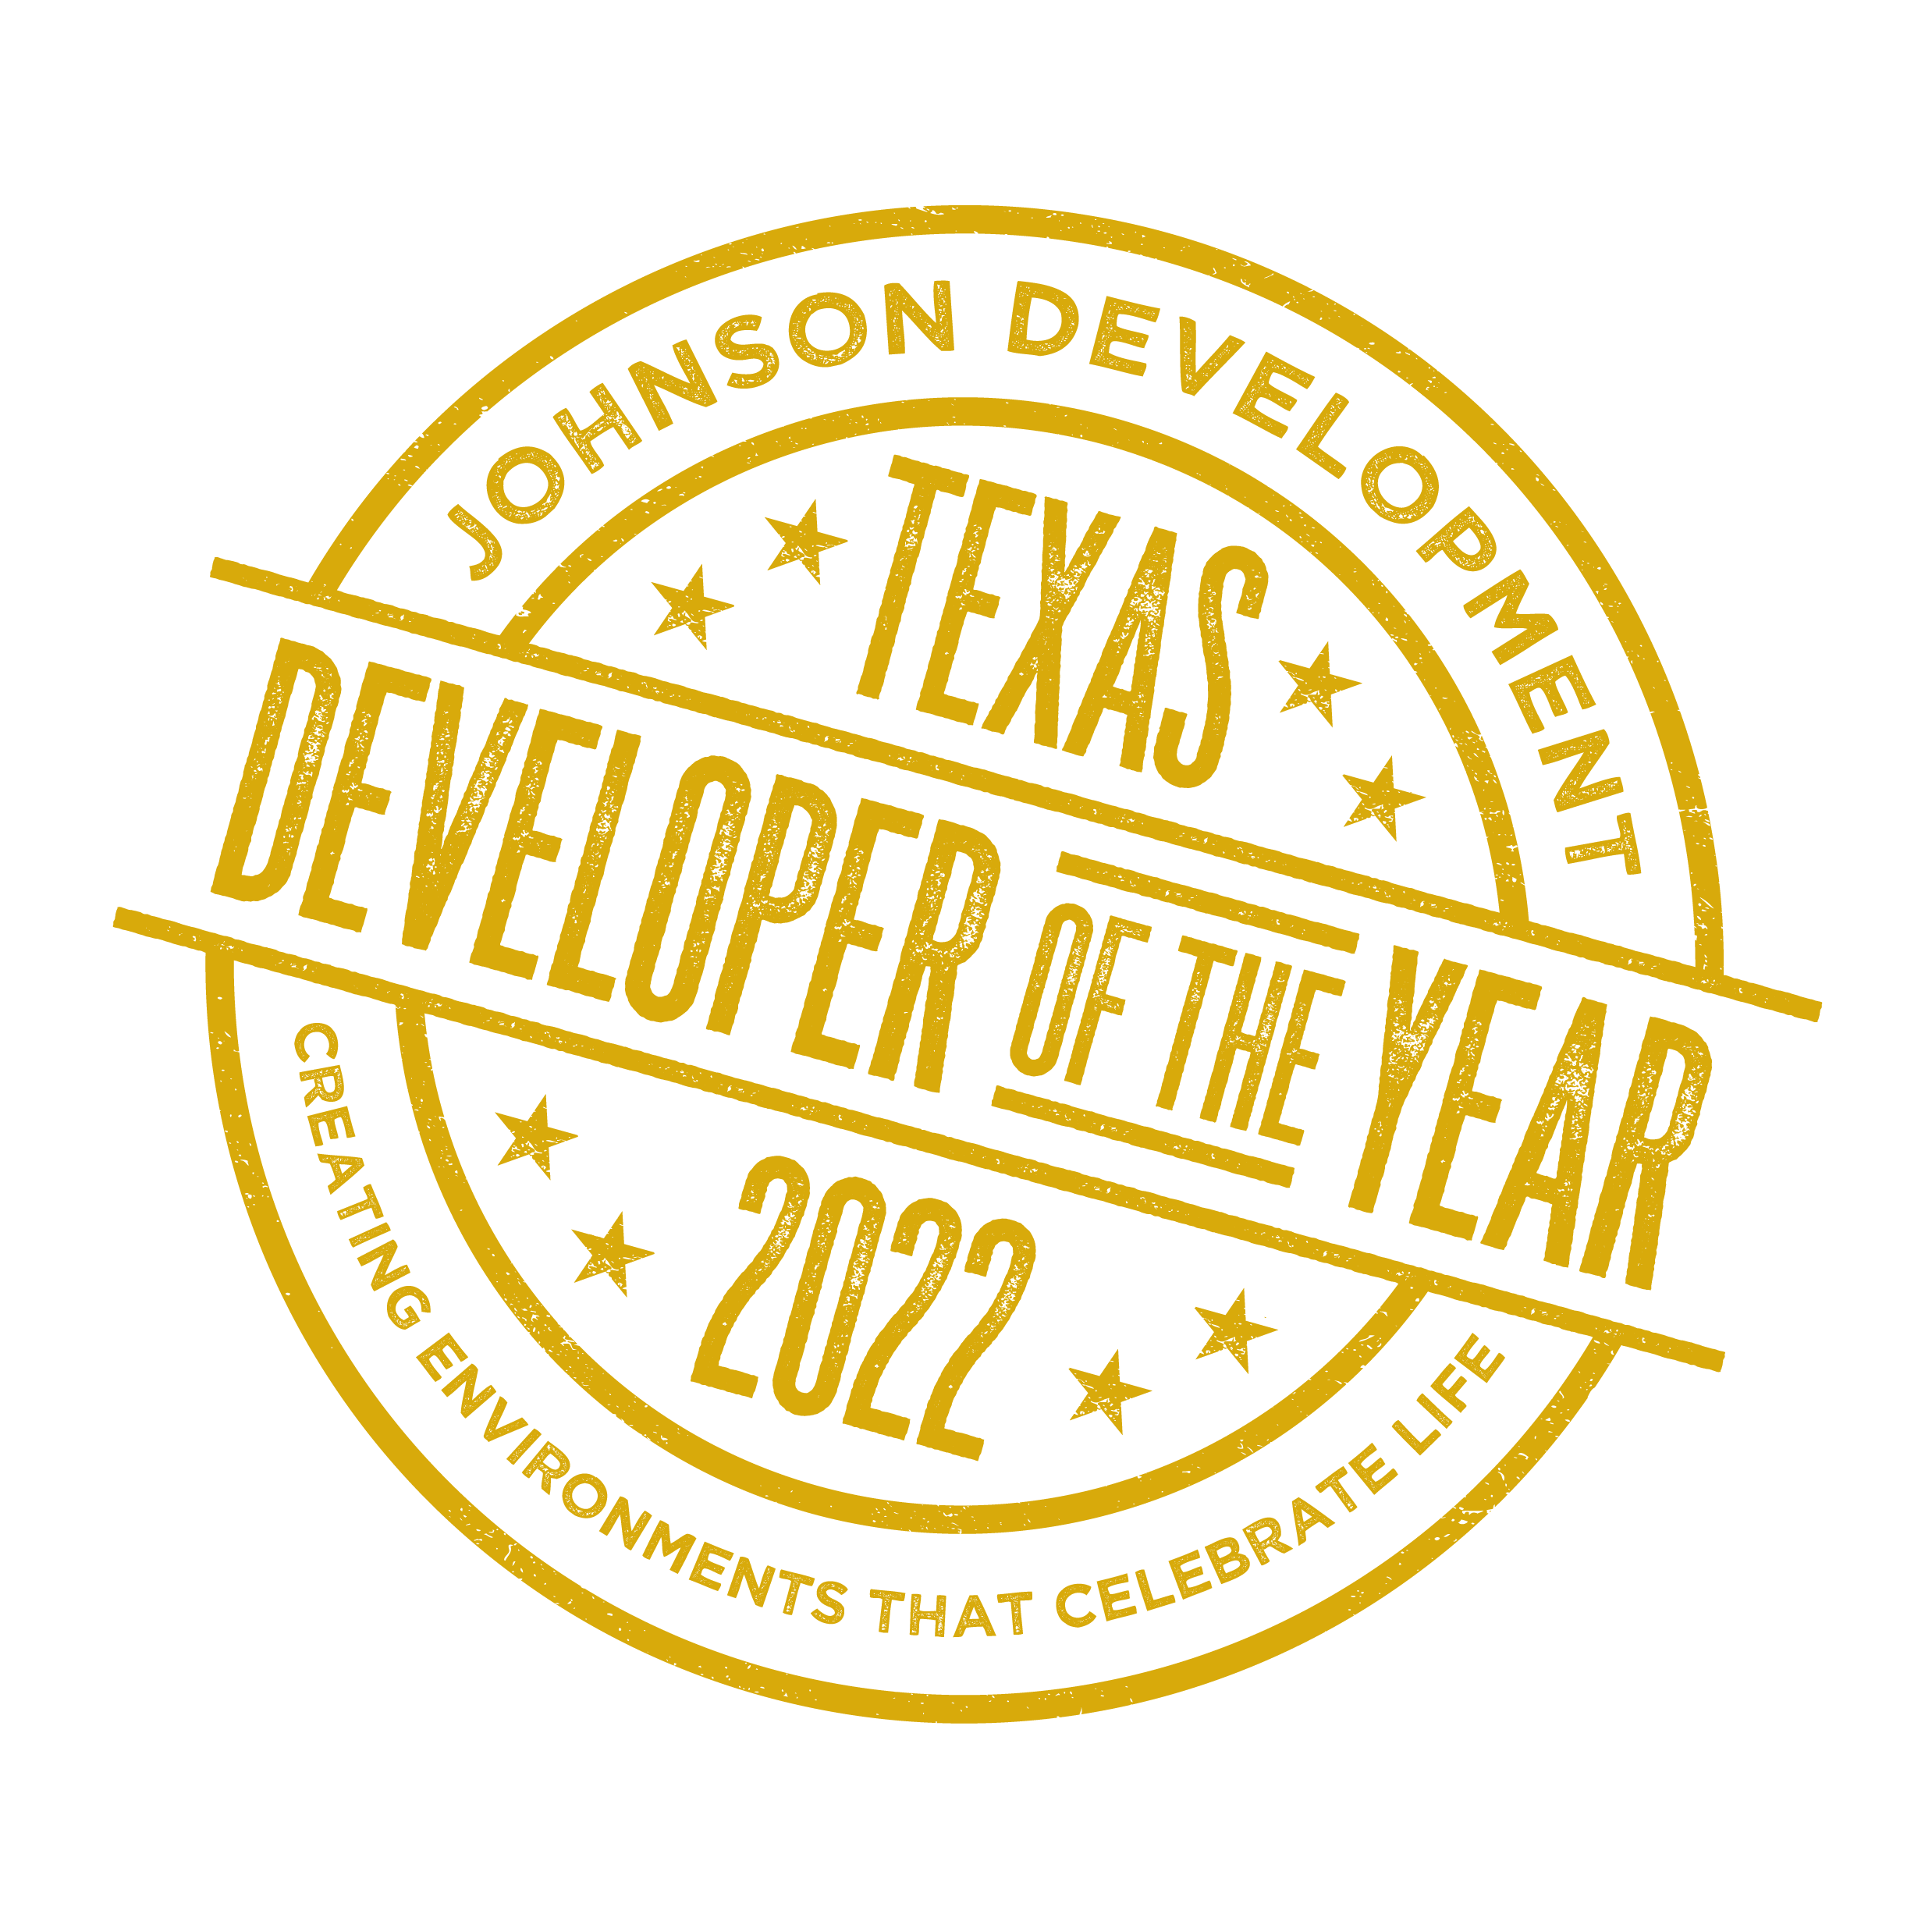 Johnson Development developer of the year stamp